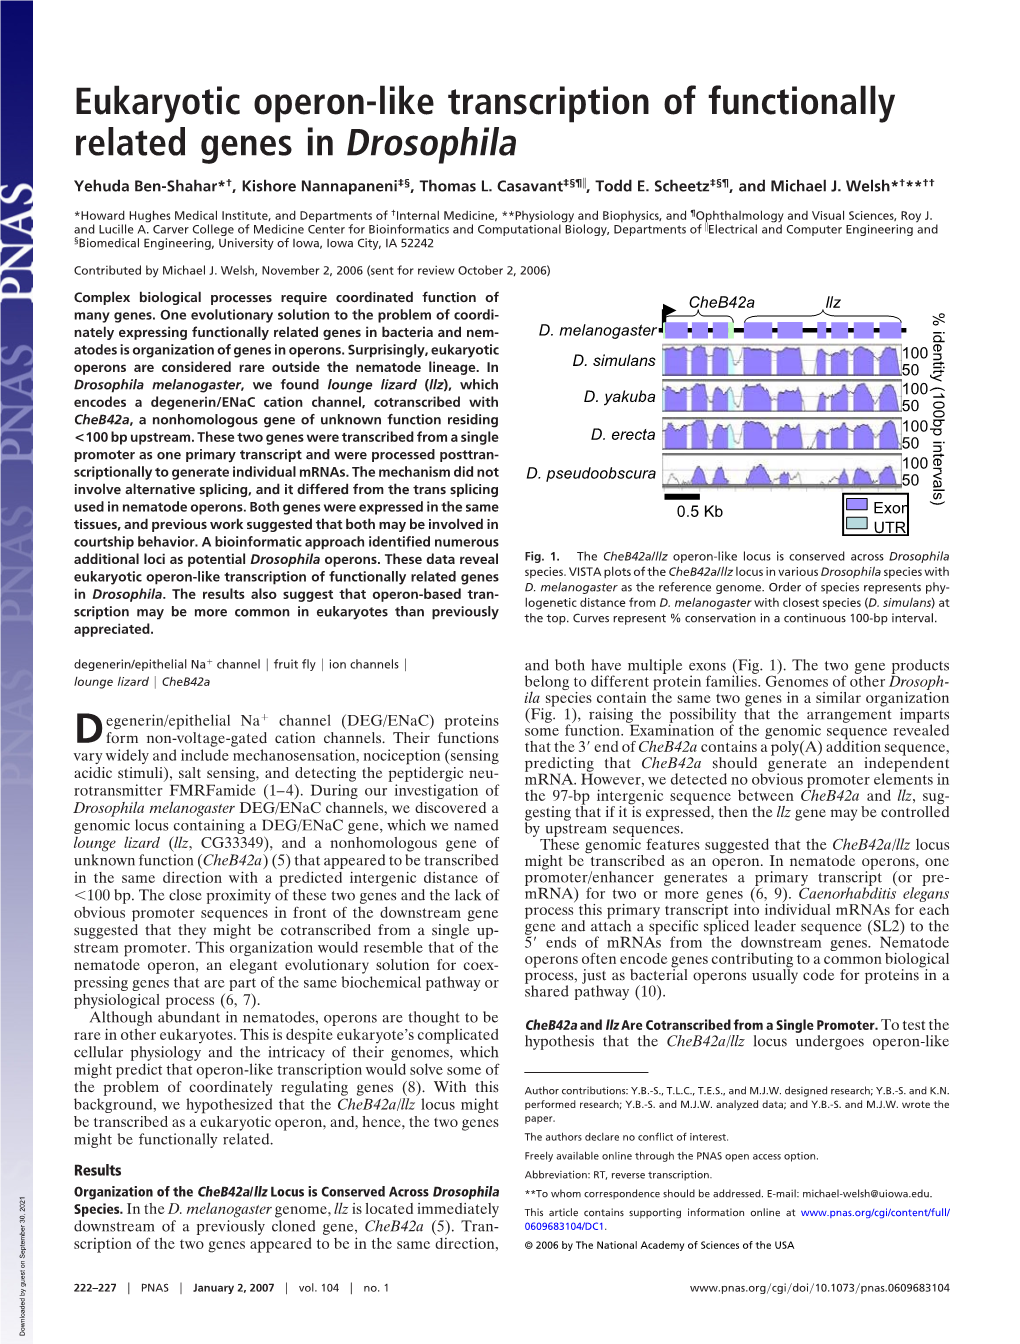 Eukaryotic Operon-Like Transcription of Functionally Related Genes in Drosophila